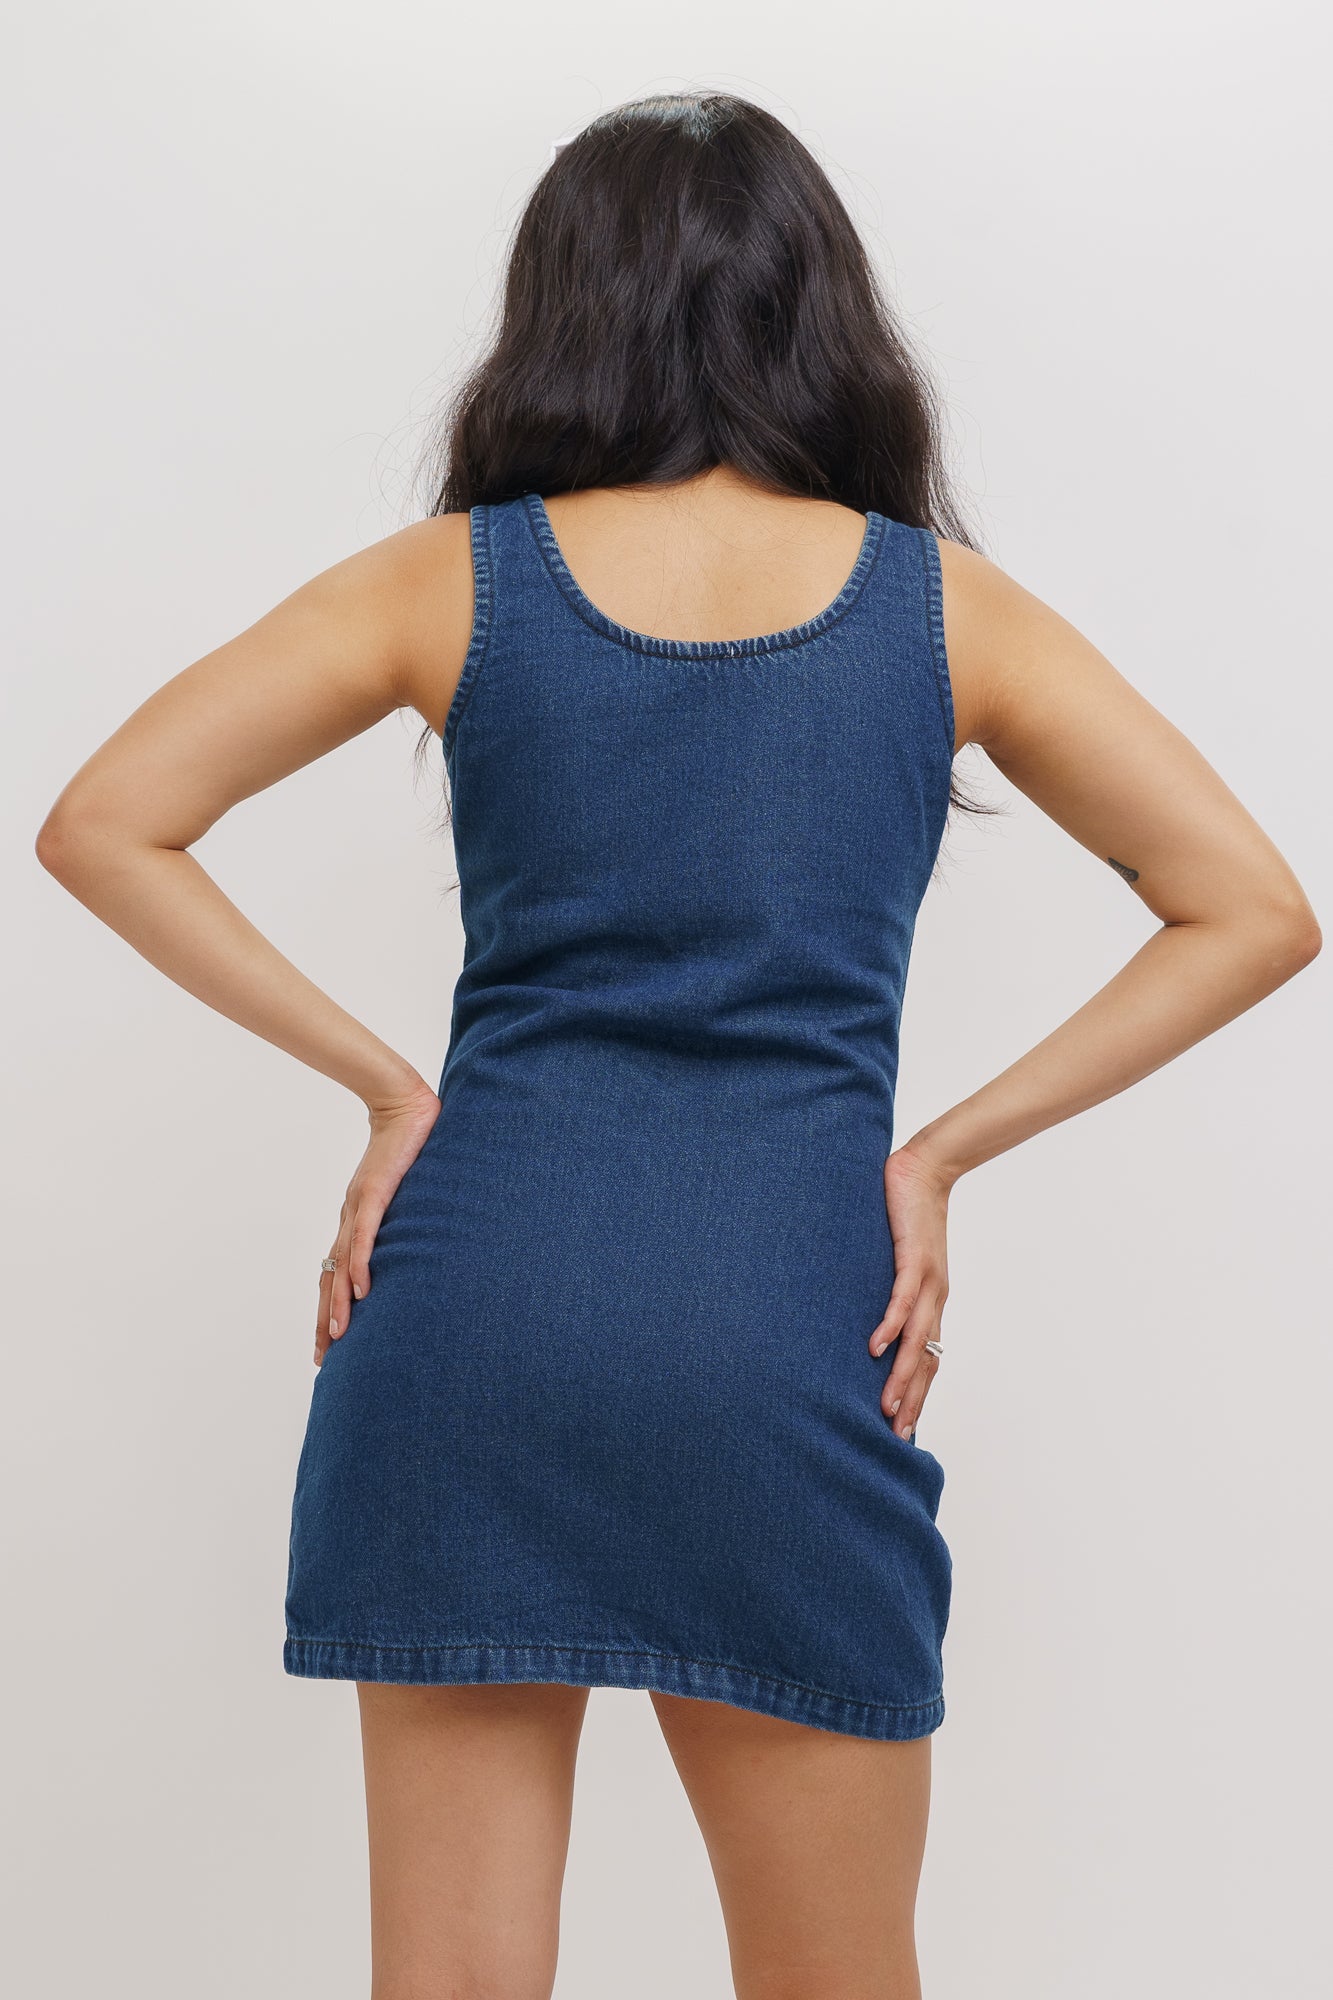 Buy hongqiantai Women Bodycon Dress Off Shoulder Long Sleeve Denim Party  Club Mini Dress Denim Blue M at Amazon.in